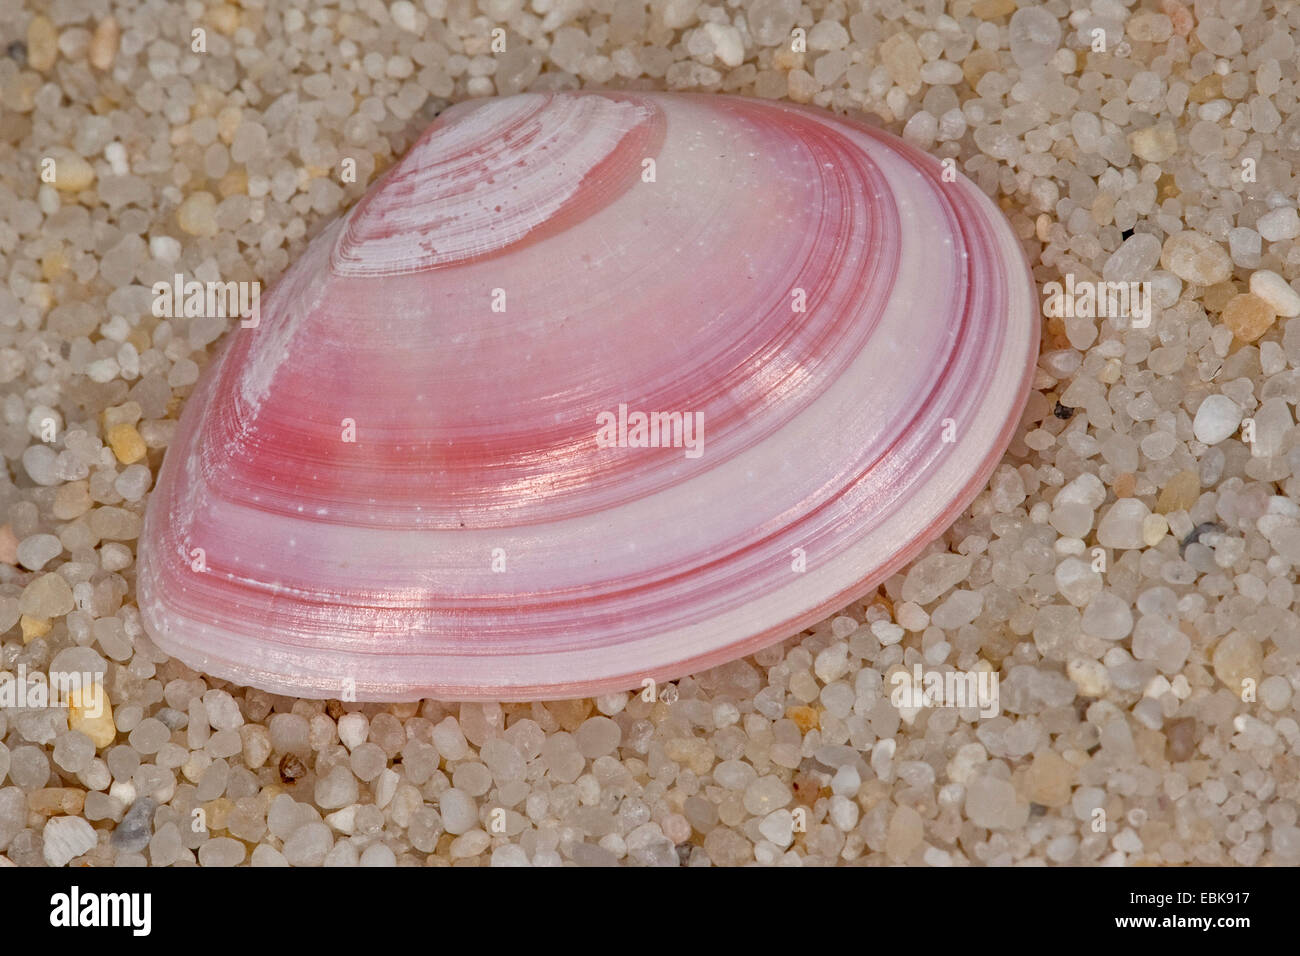 Baltic macoma (Macoma balthica, Macoma baltica, Tellina balthica), shell lying on thr beach, Germany Stock Photo